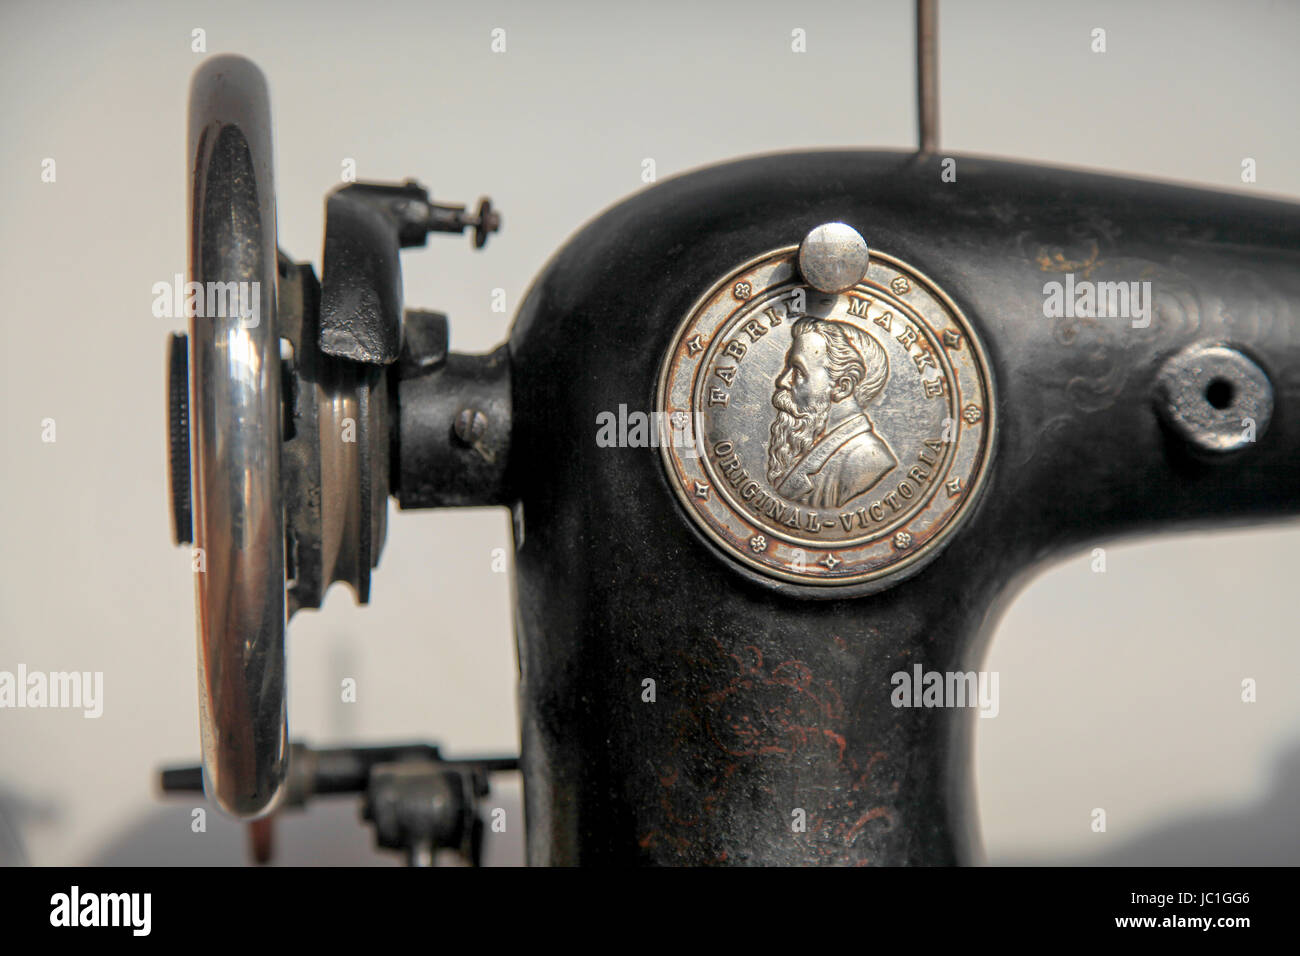 Alte Nähmaschine Original Victoria von Fabrik-Marke Stockfotografie - Alamy